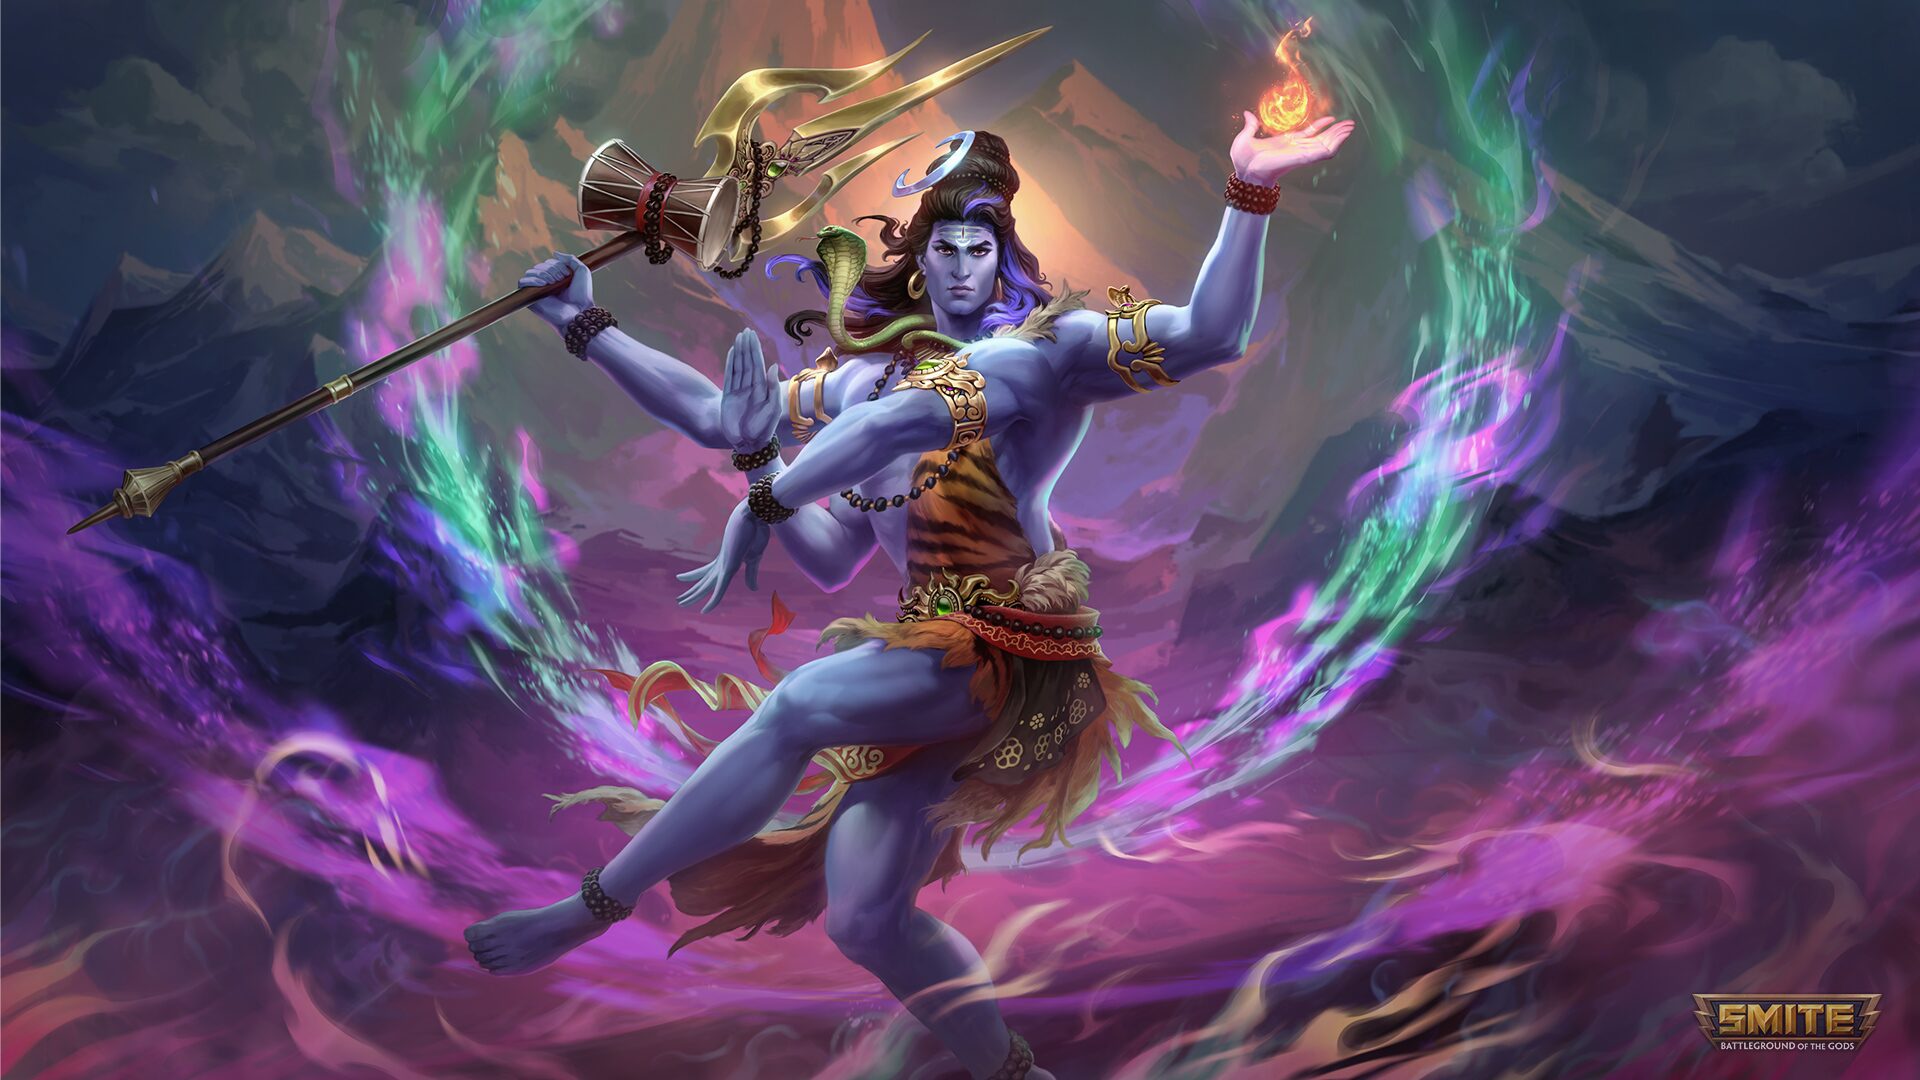 Shiva the Destroyer enters the SMITE battlefield